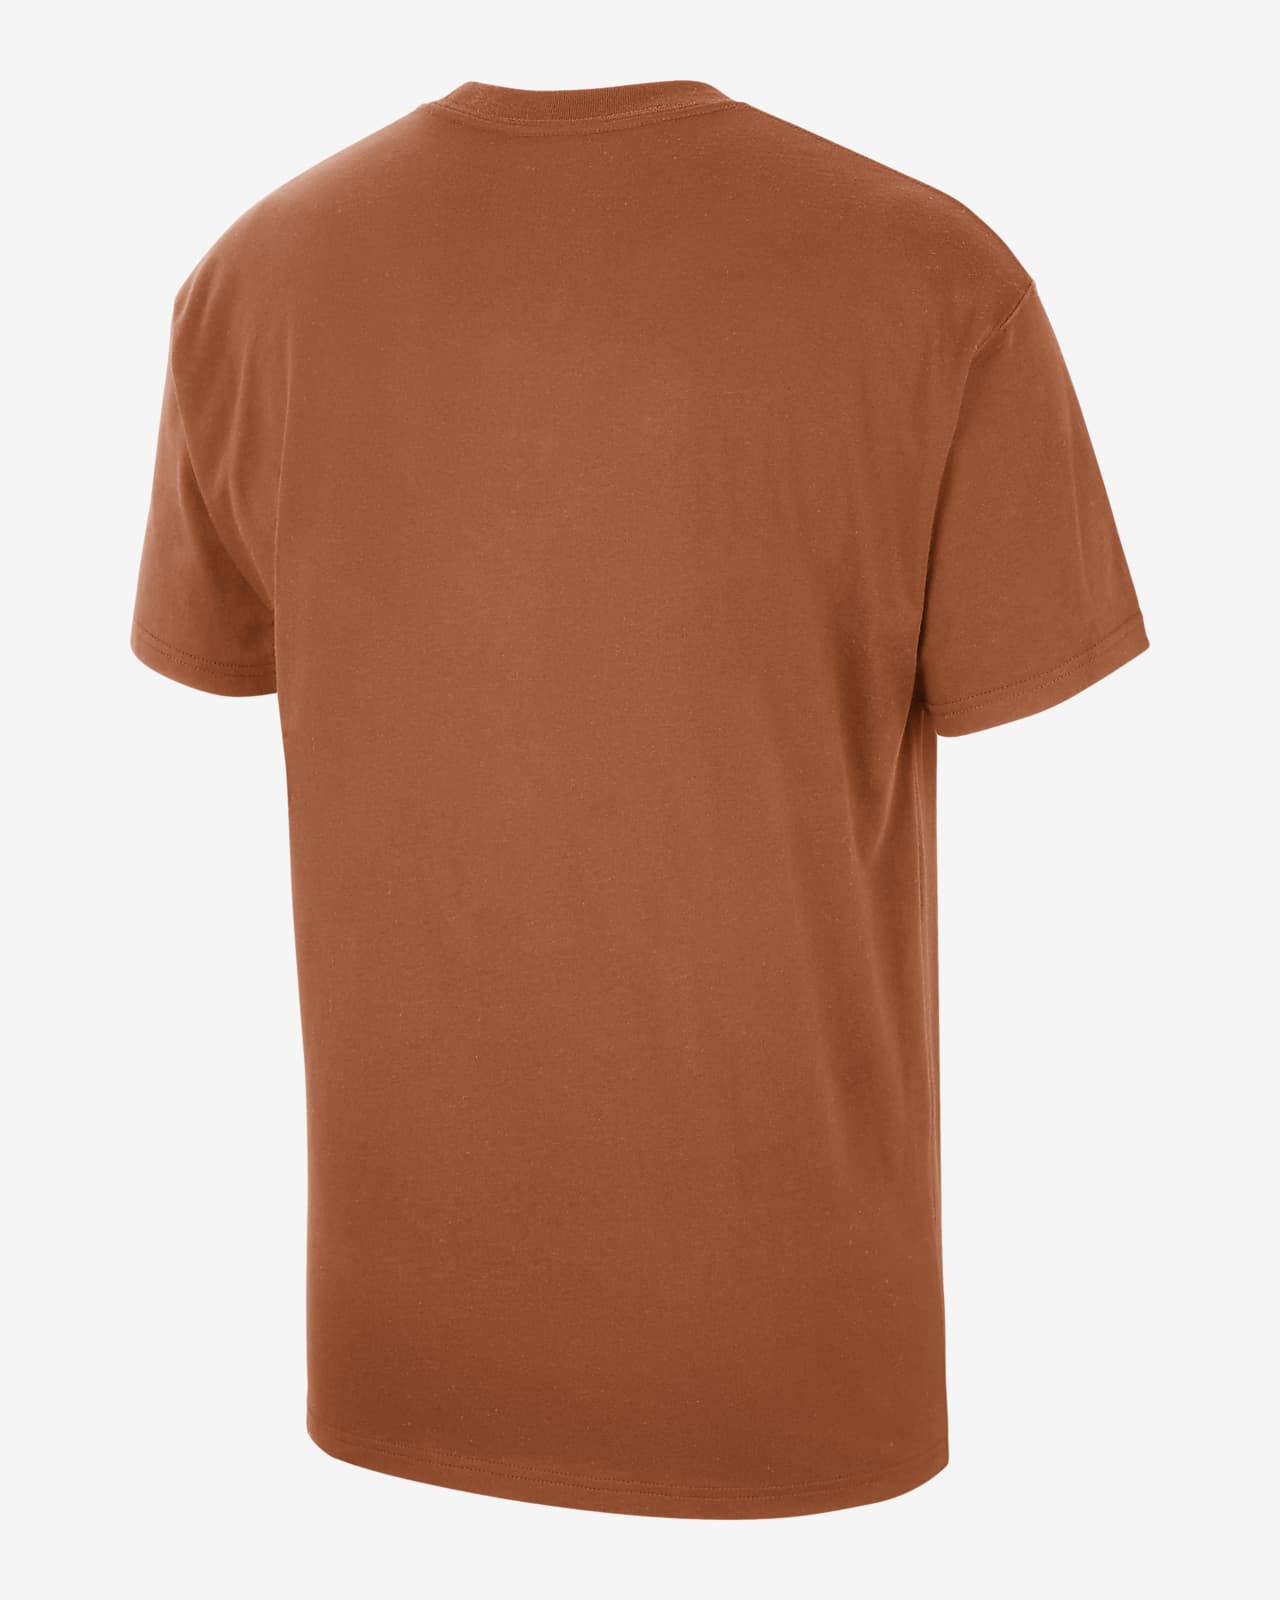 TEXAS LONGHORNS Hook 'em Horns Burnt Orange T-Shirt Men's Size Med